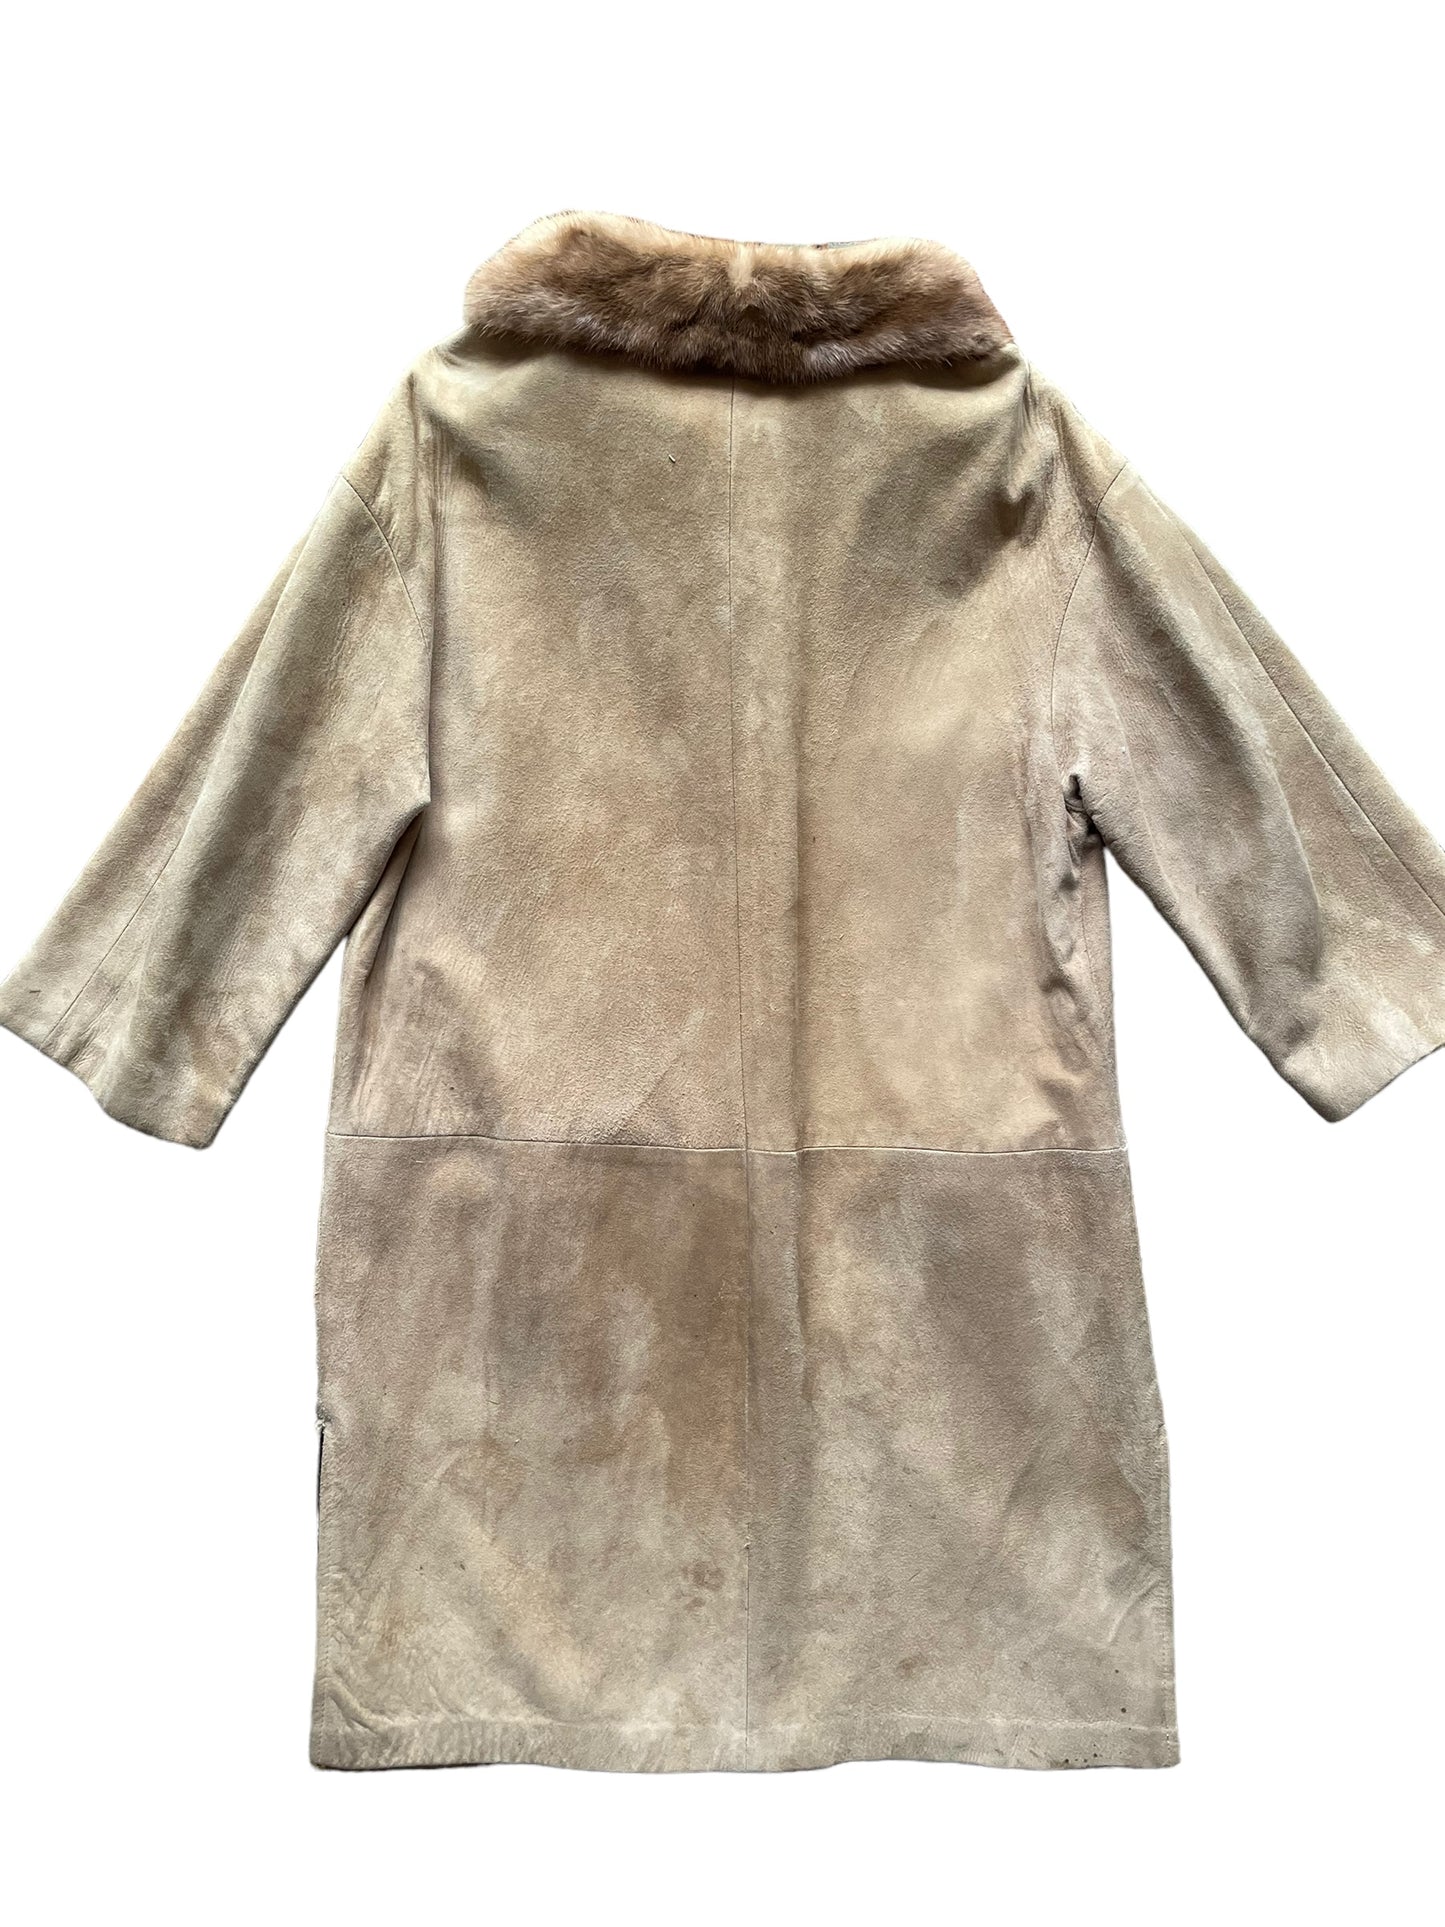 Full back view of Vintage 1960s Suede Coat with Mink Collar SZ M-L | Seattle True Vintage | Barn Owl Vintage Coats